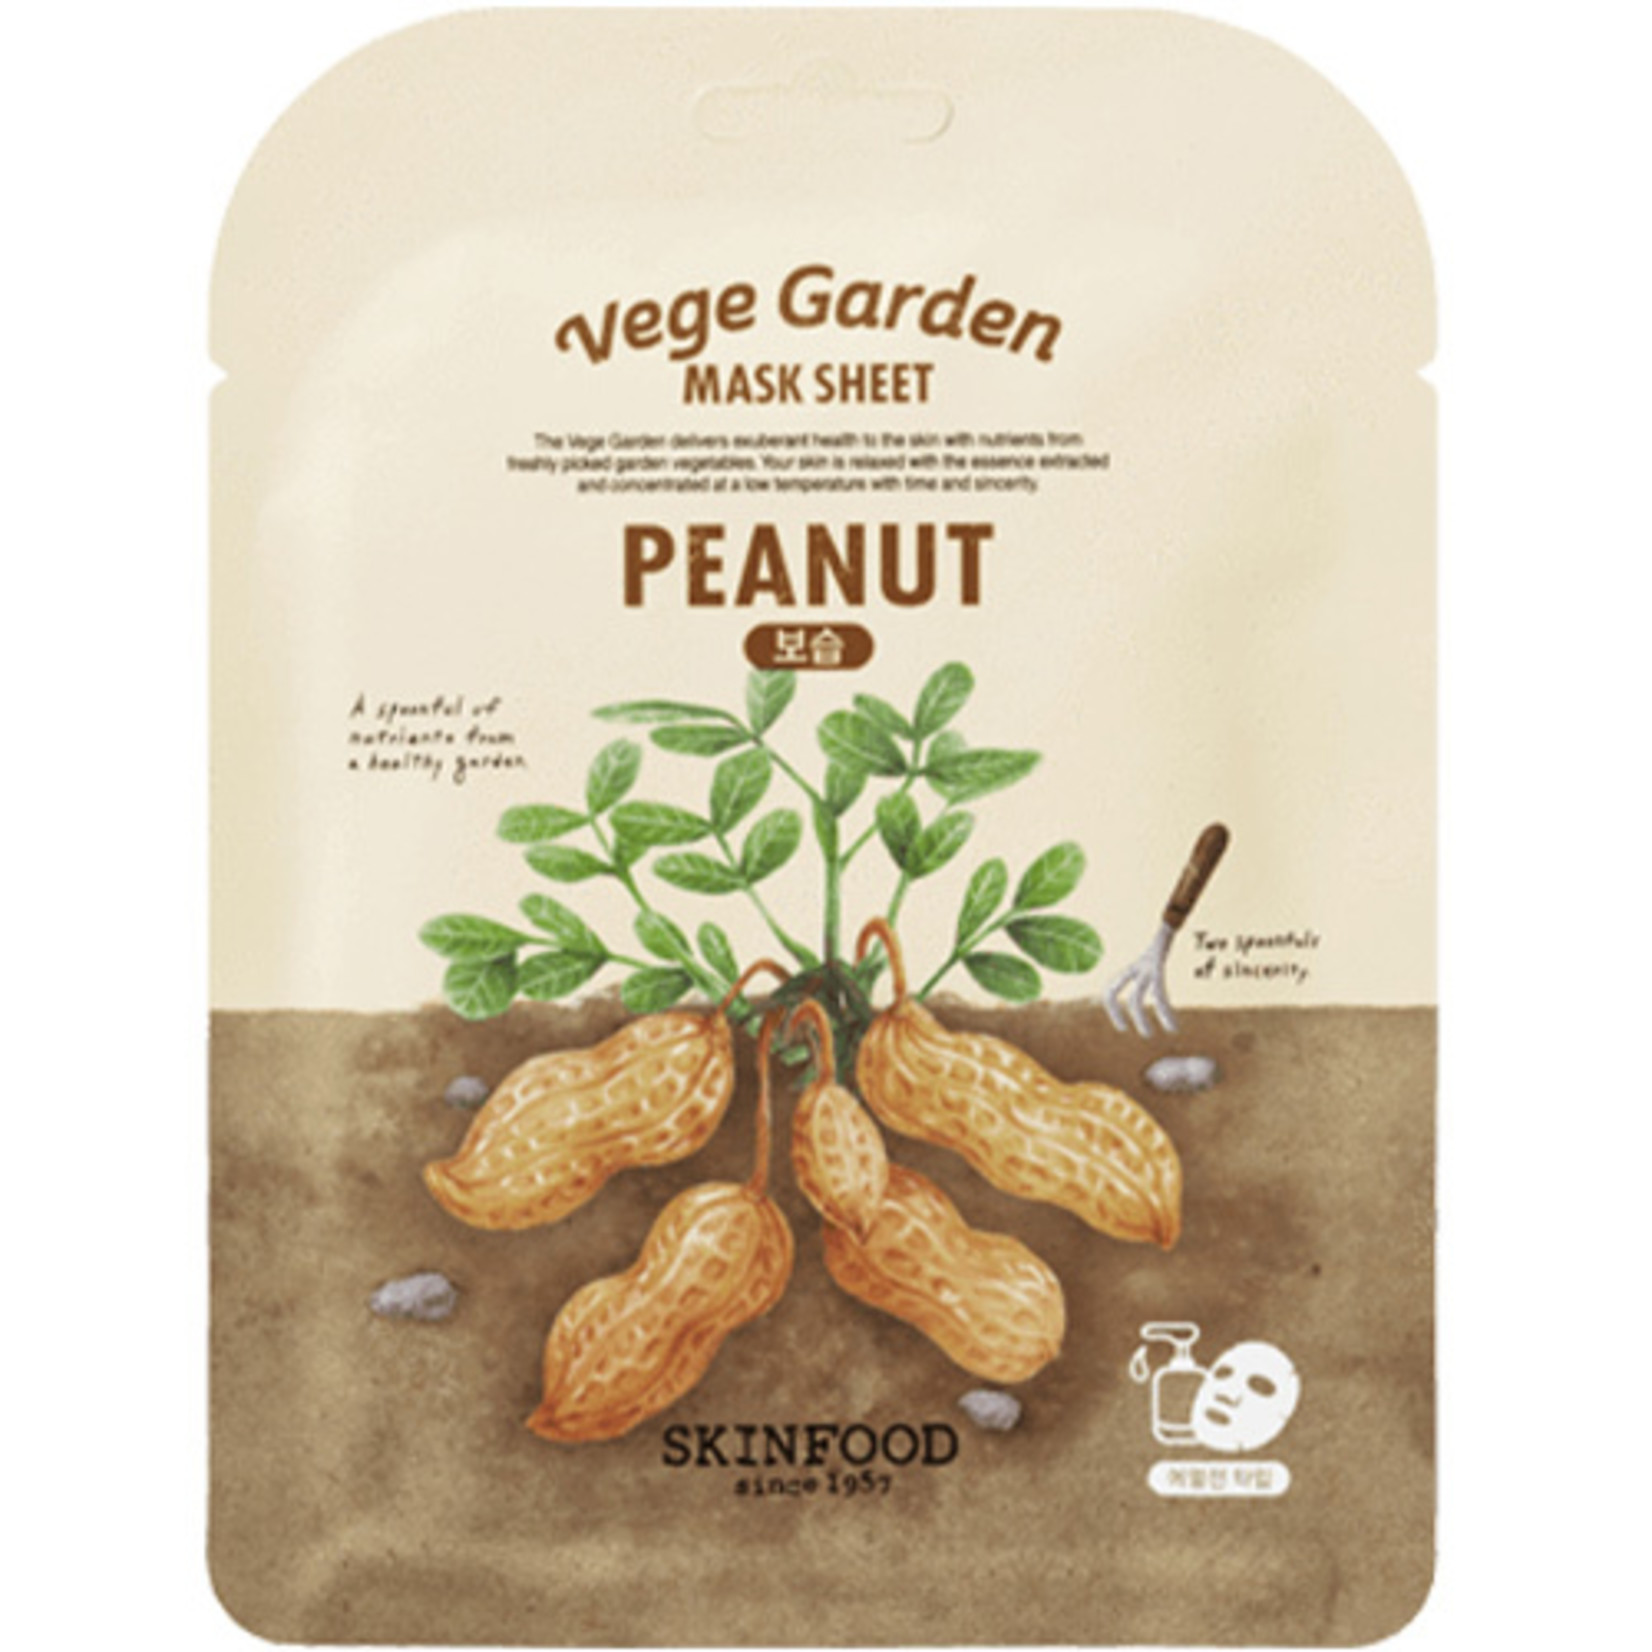 SKINFOOD Vege Garden Peanut Mask Sheet